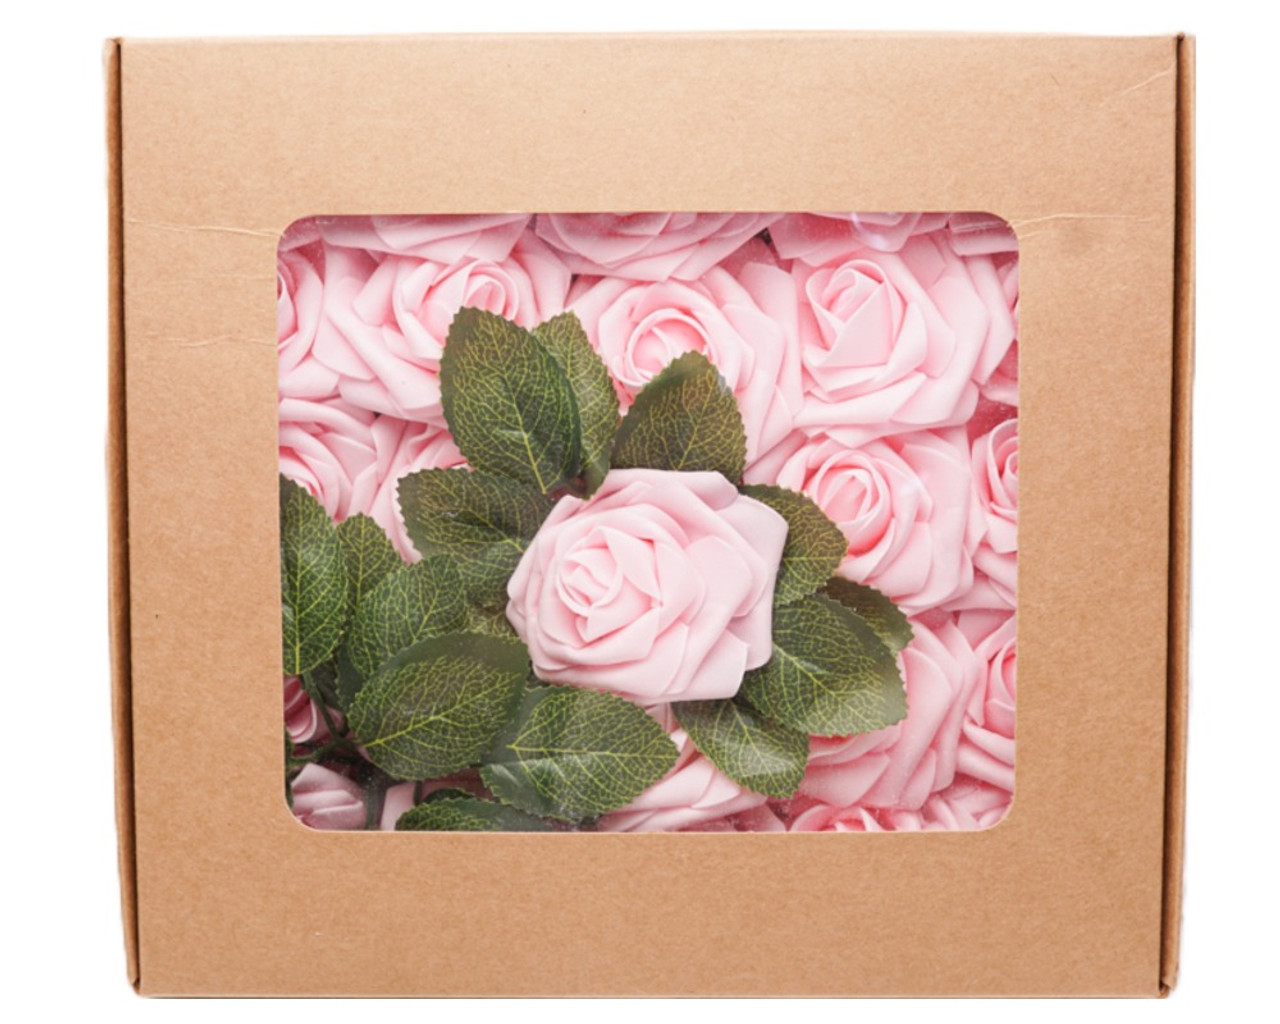 Foam PE Artificial Roses with Stems for Flower Arrangement - Box of 25 –  BBJ WRAPS